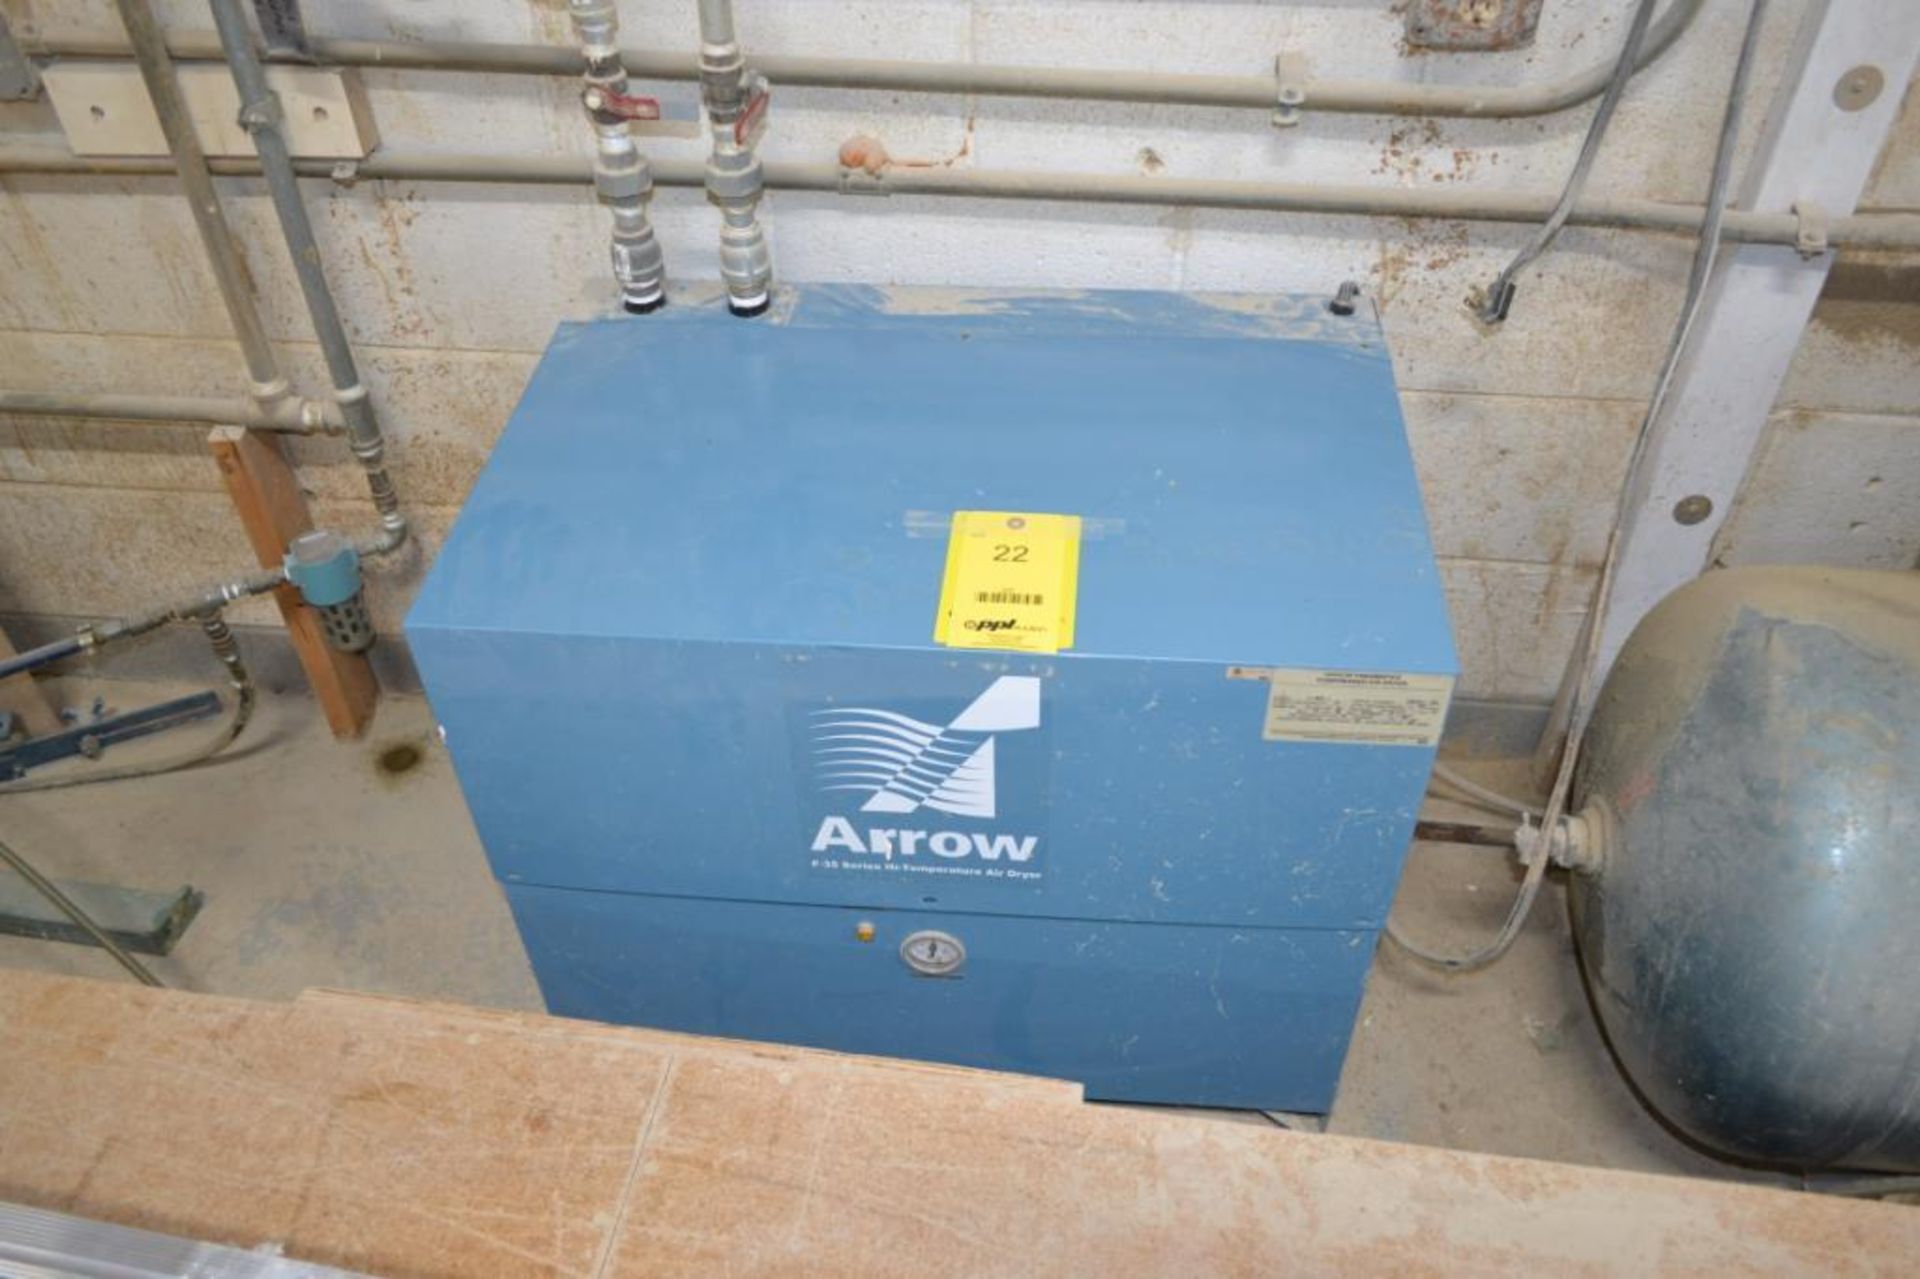 Arrow Refrigerated Air Dryer Series F35, S/N 2452761-064